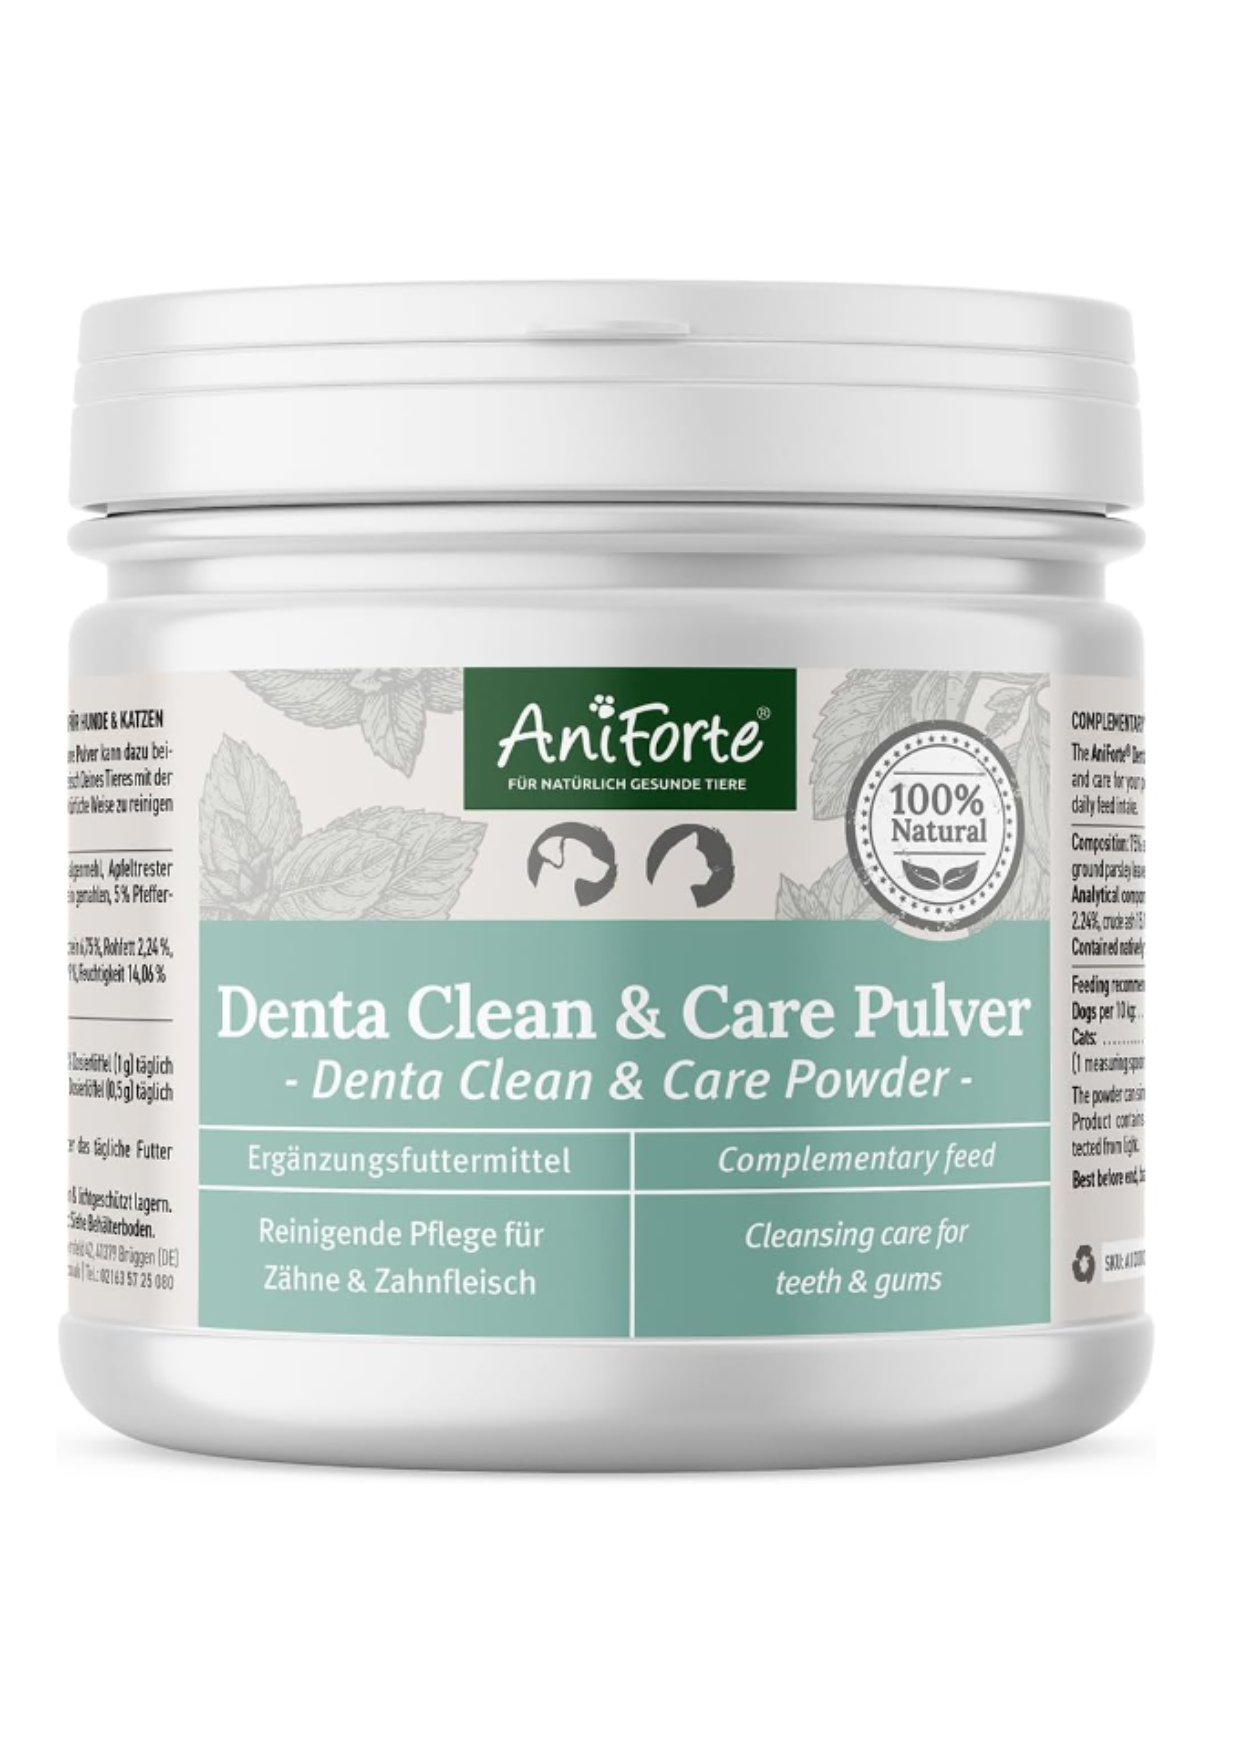 AniForte Denta Clean & Care